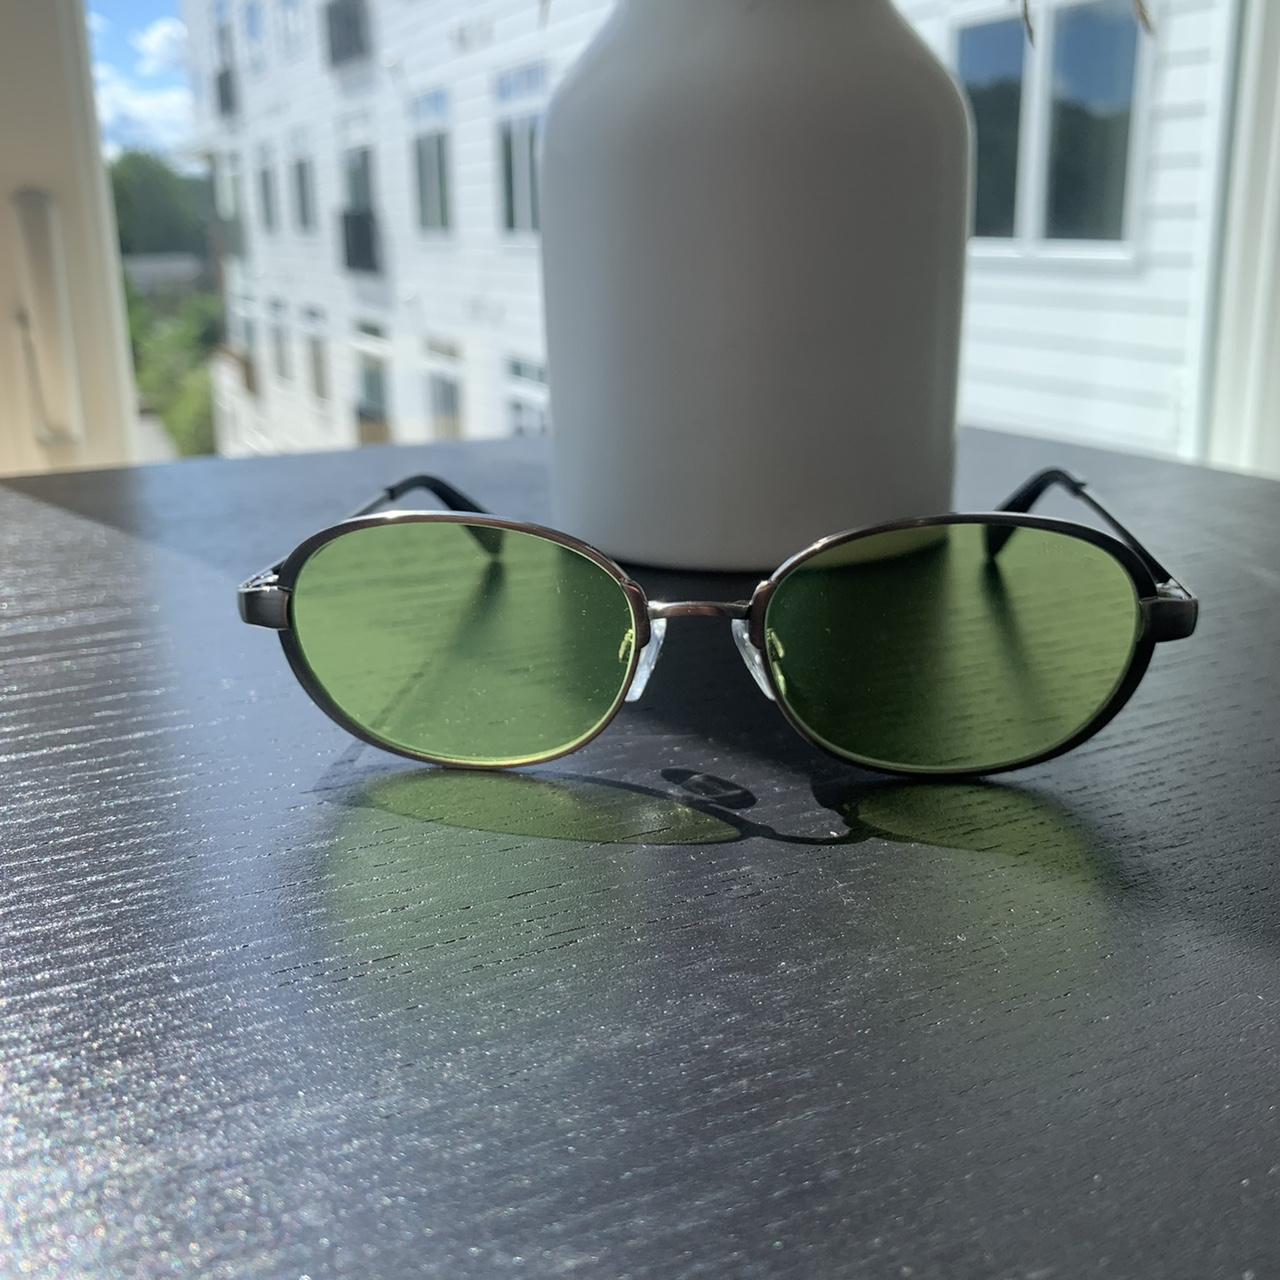 Product Image 1 - BRAND NEW MVMT Loveless Sunglasses
Only